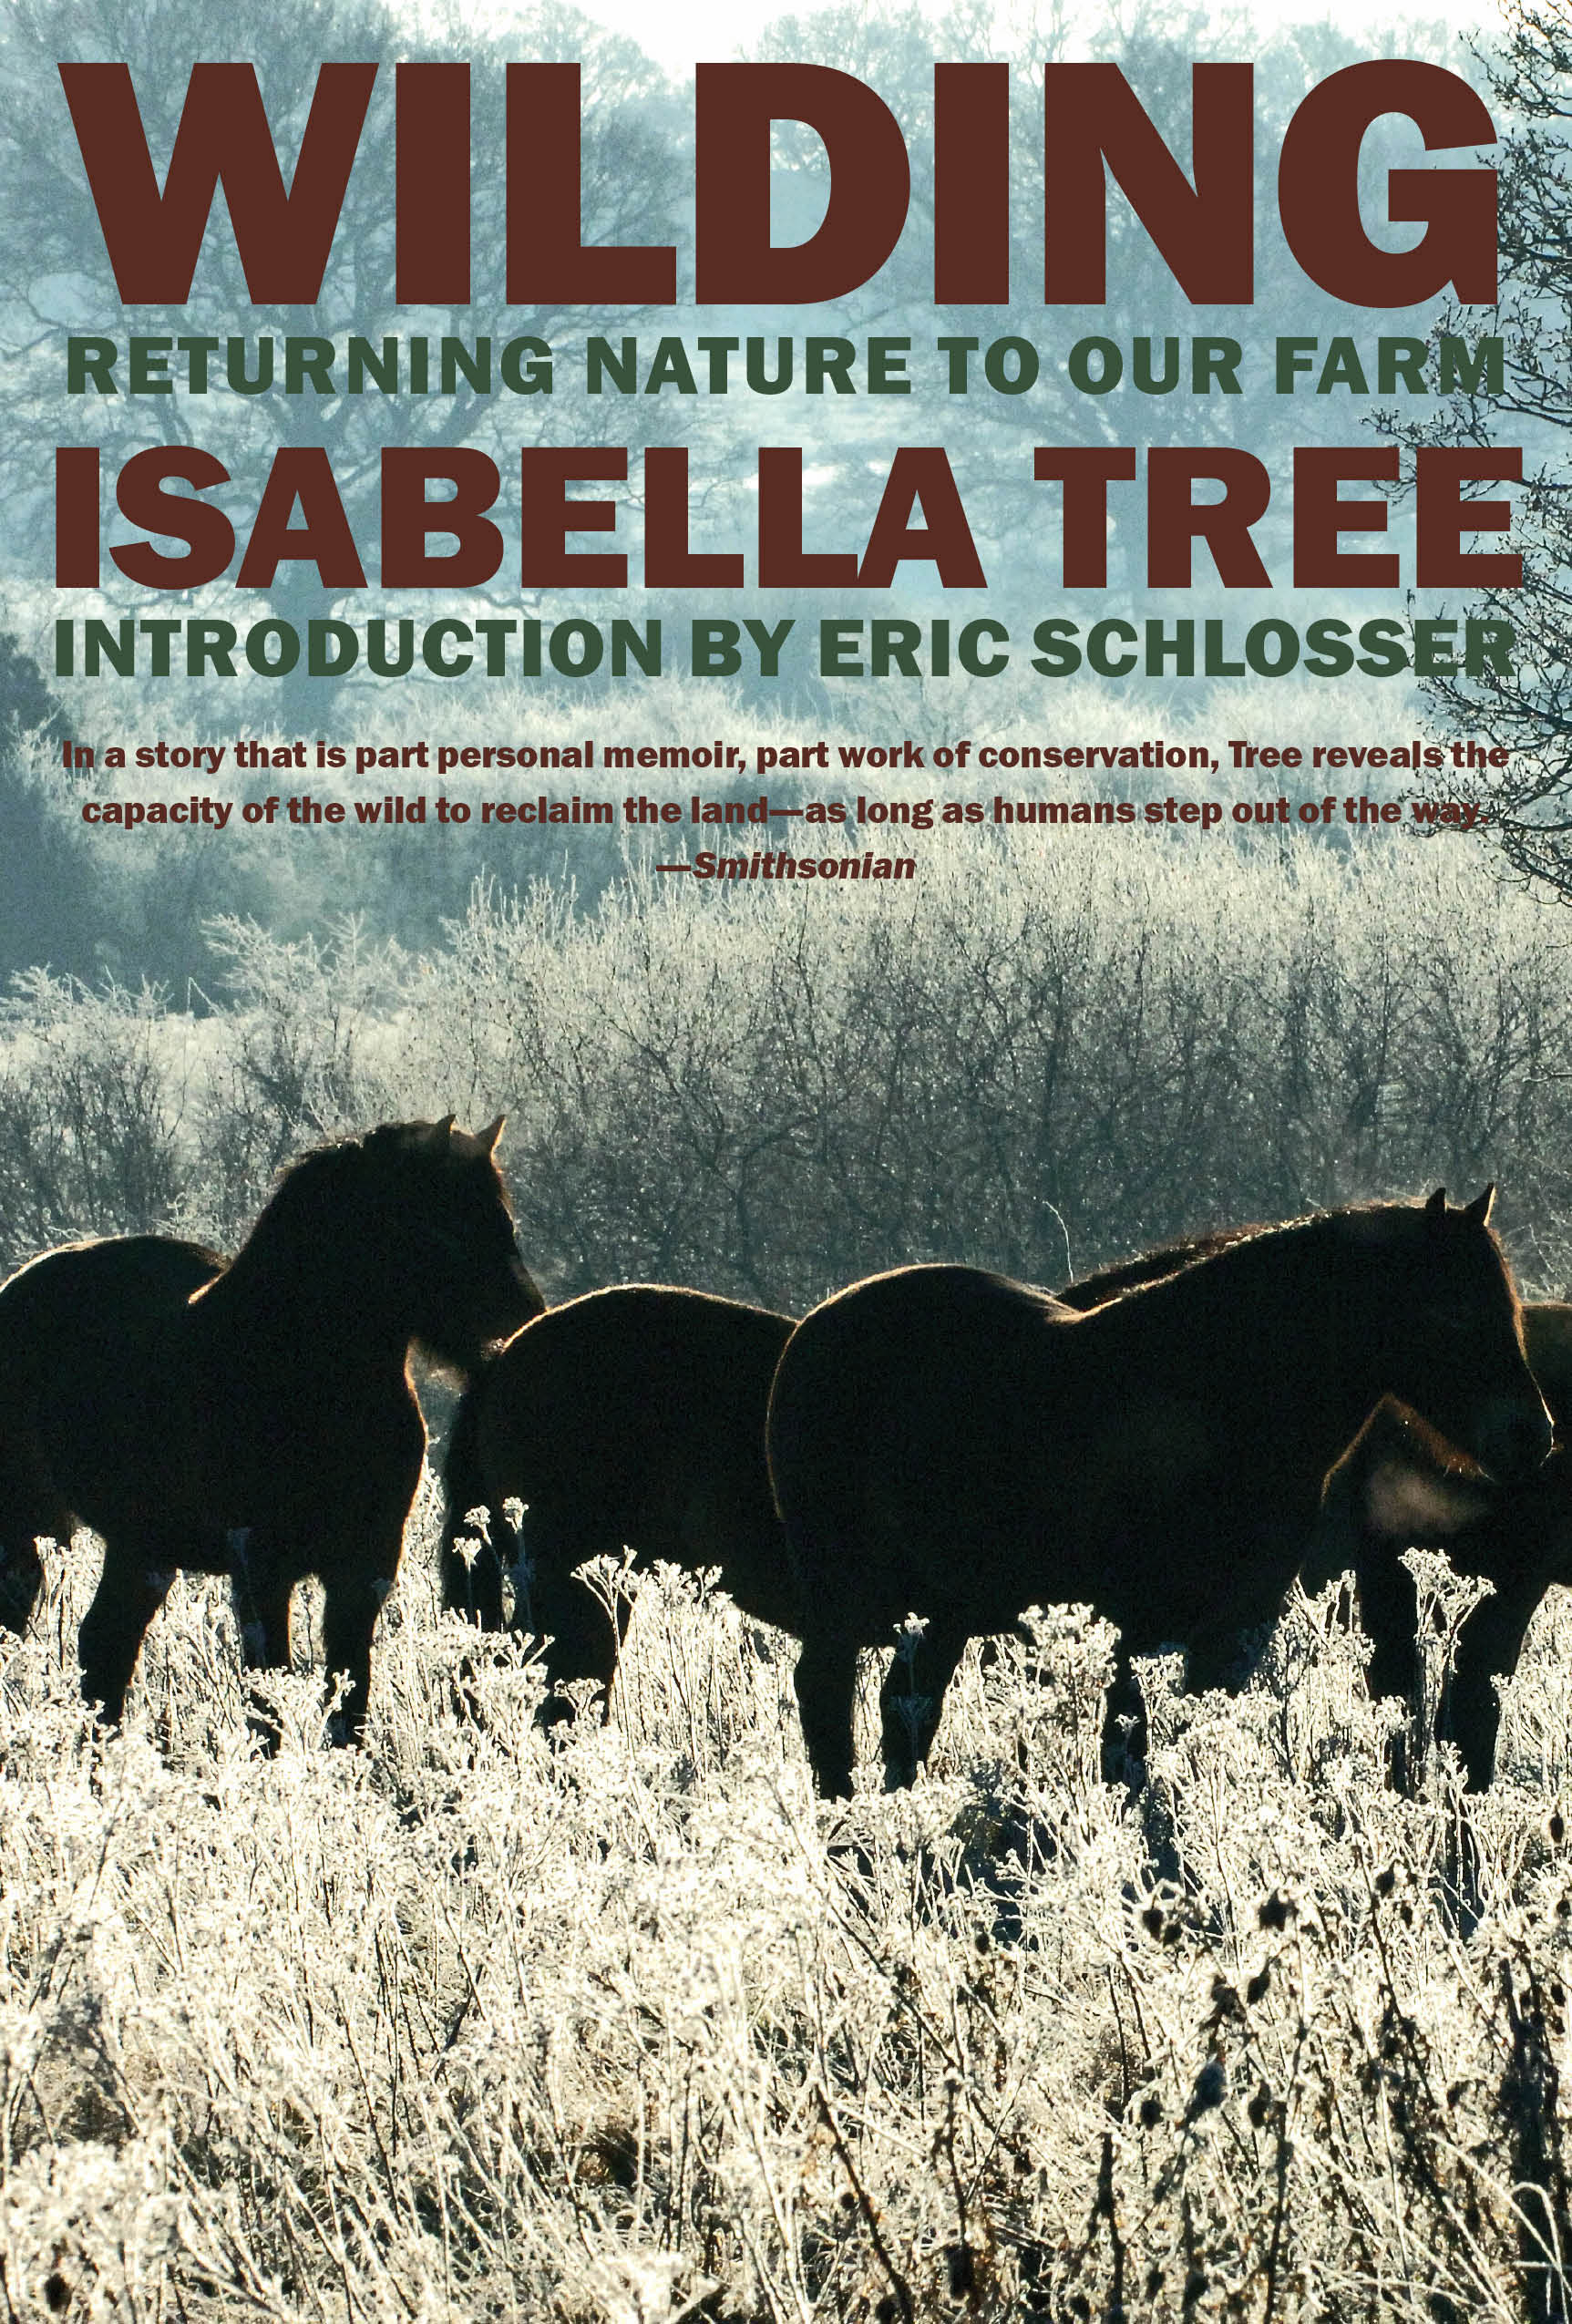 Visit https://cce.bard.edu/events/isabella-tree